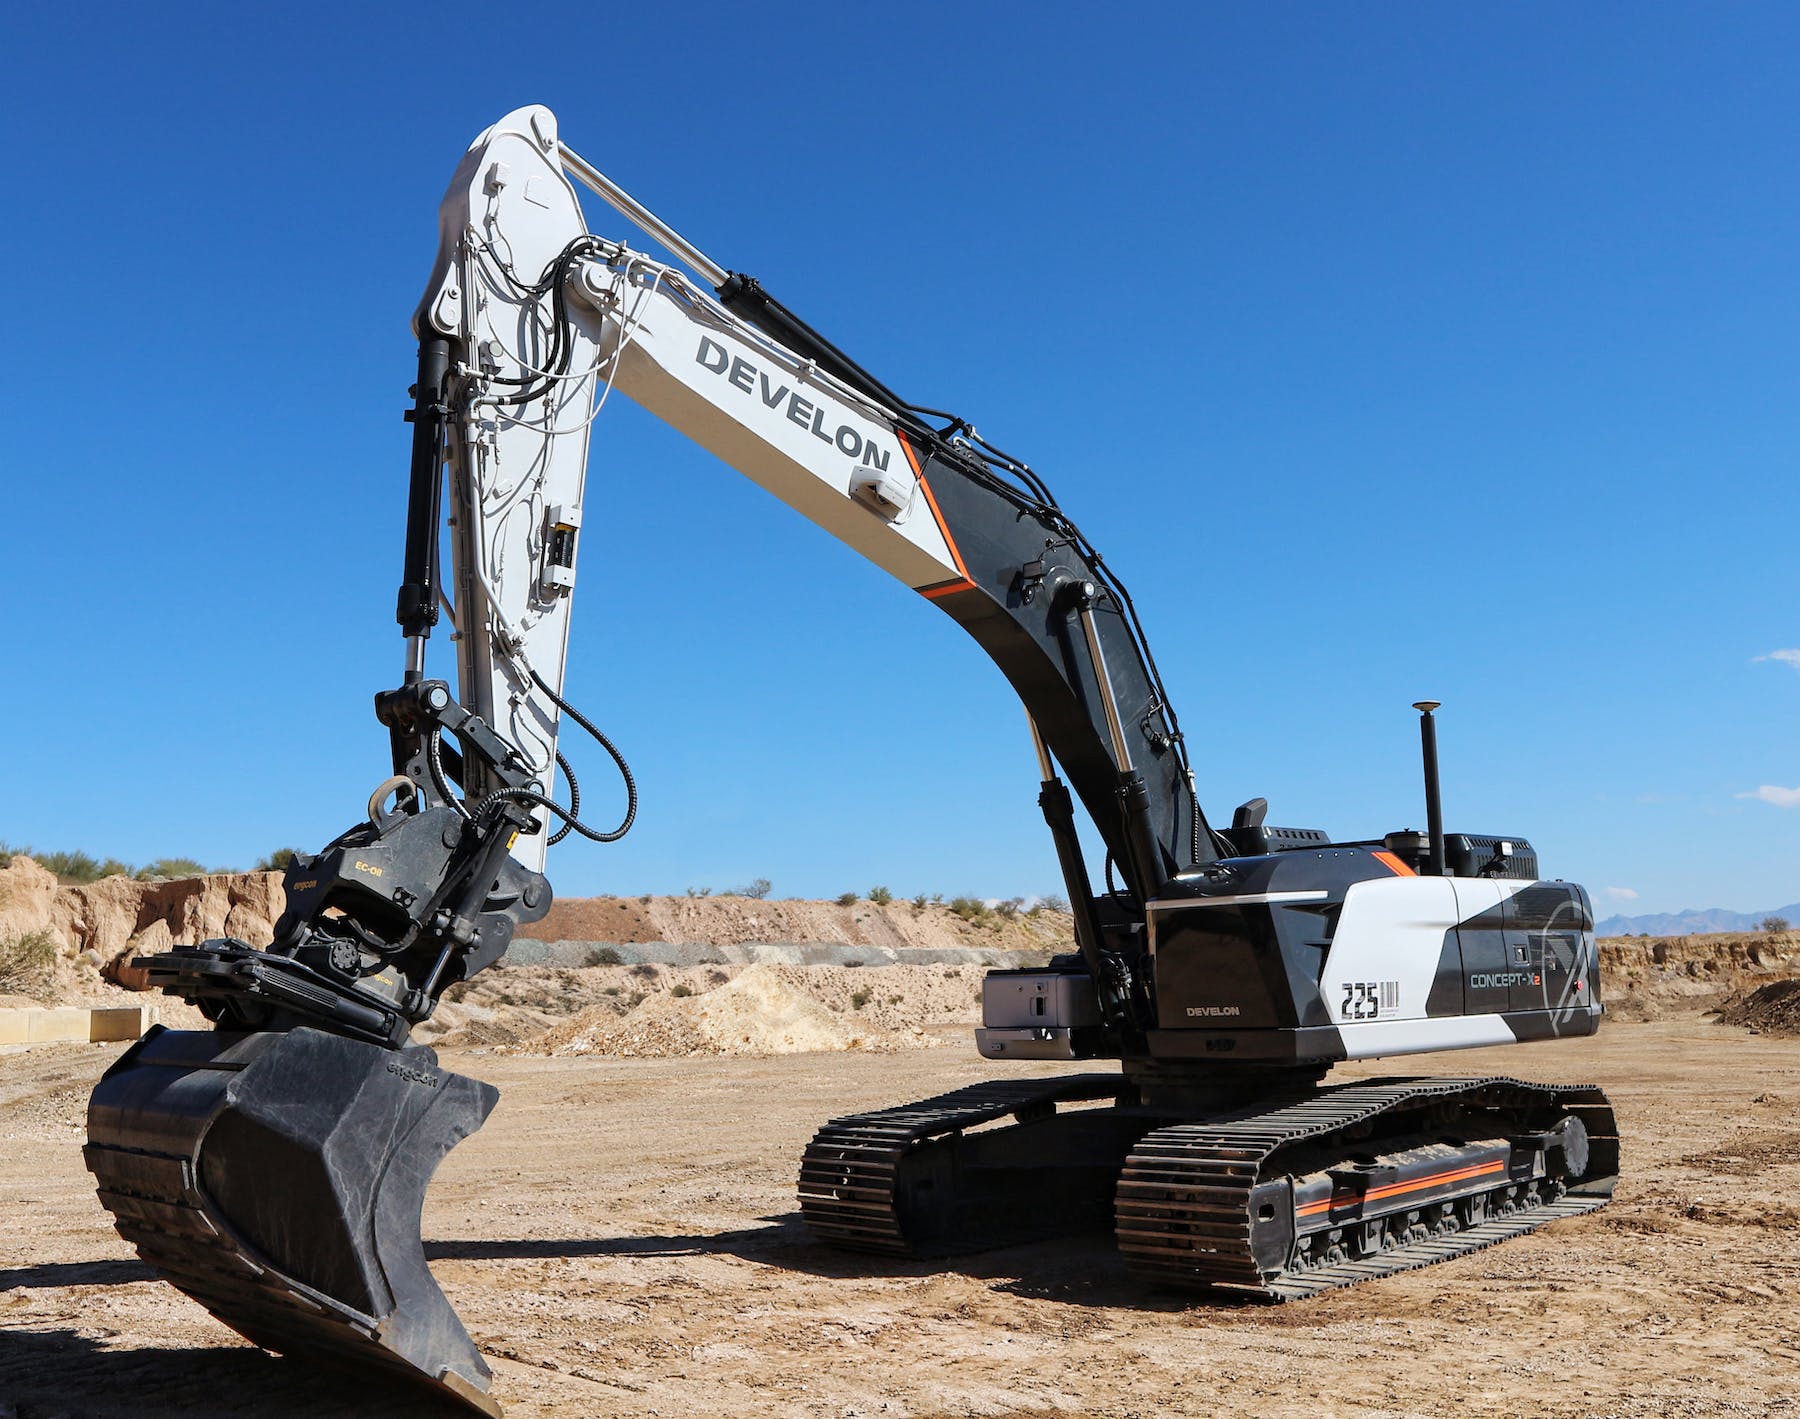 Develon DX225-CX autonomous excavator in desert